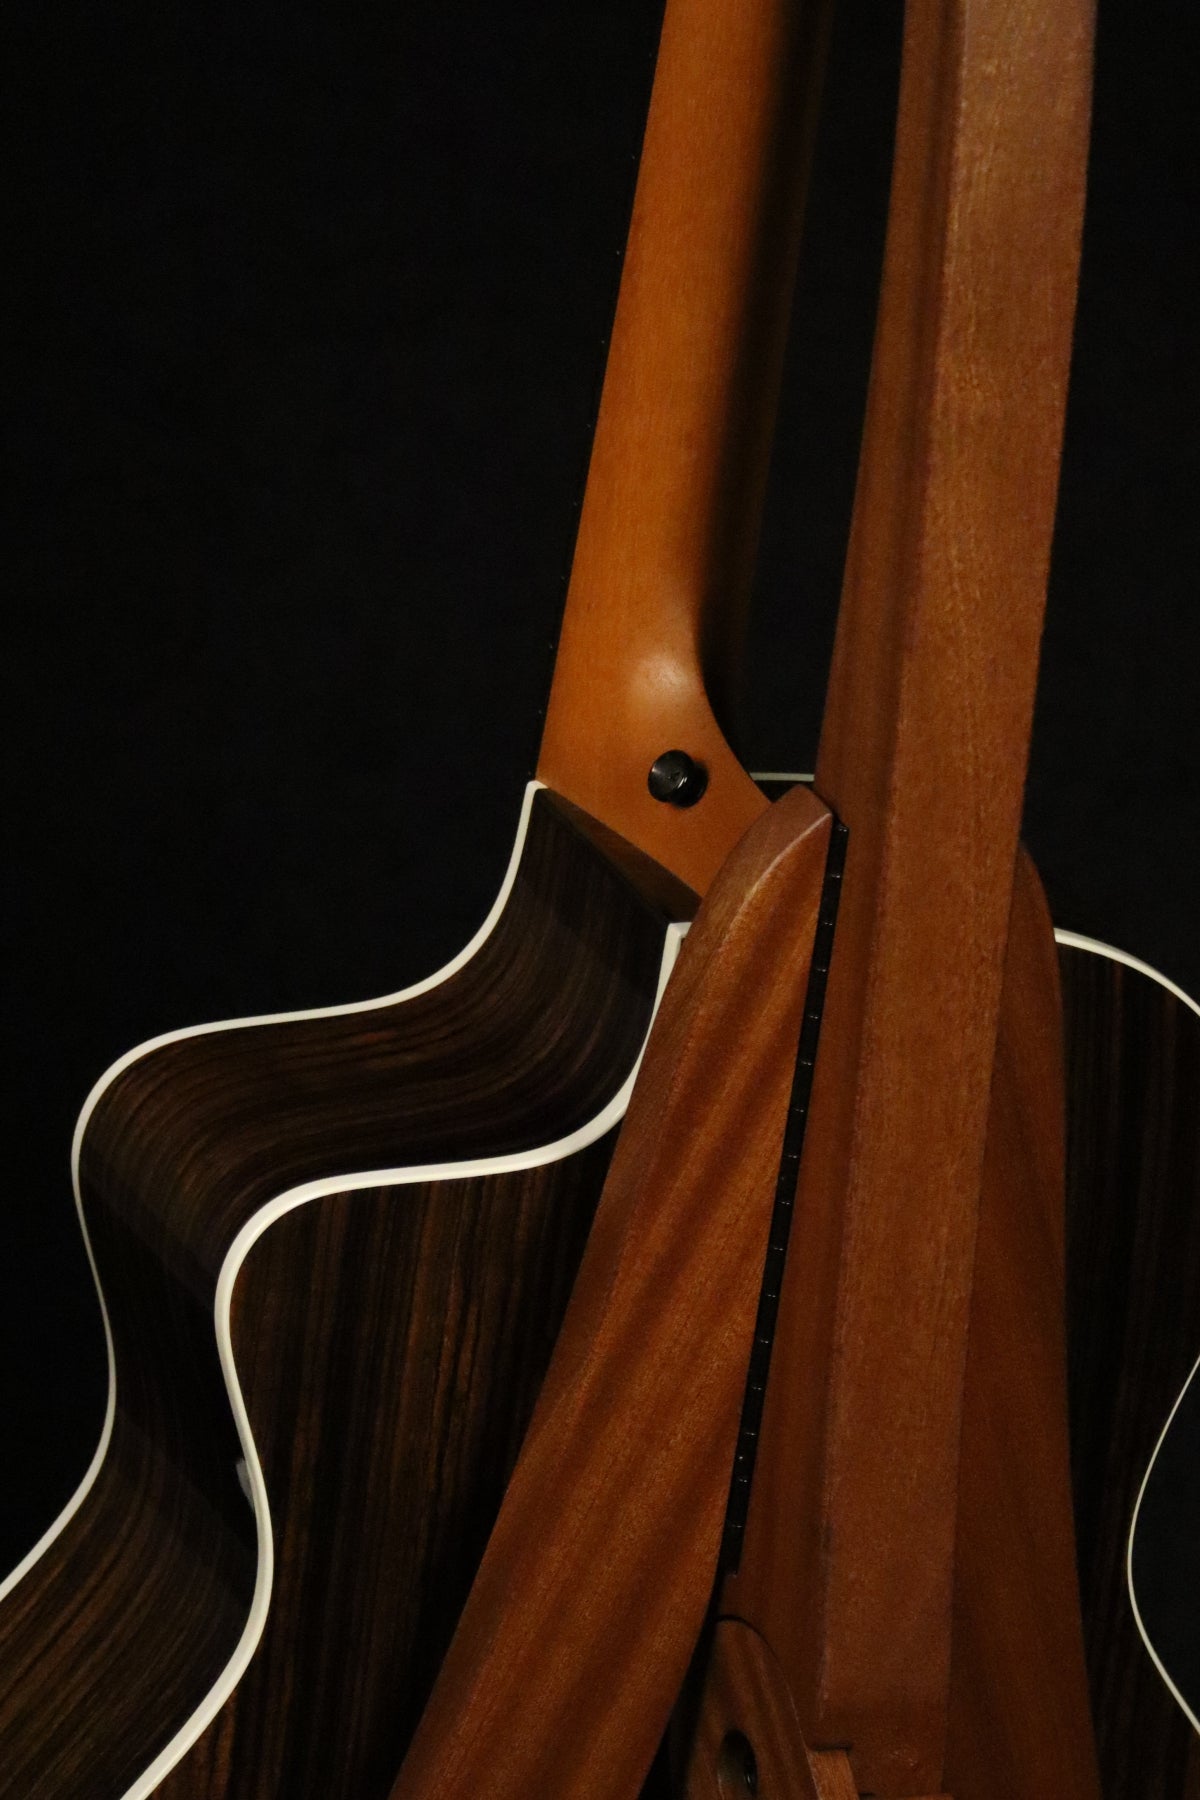 Folding sapele mahogany wood guitar floor stand closeup rear image with Taylor guitar